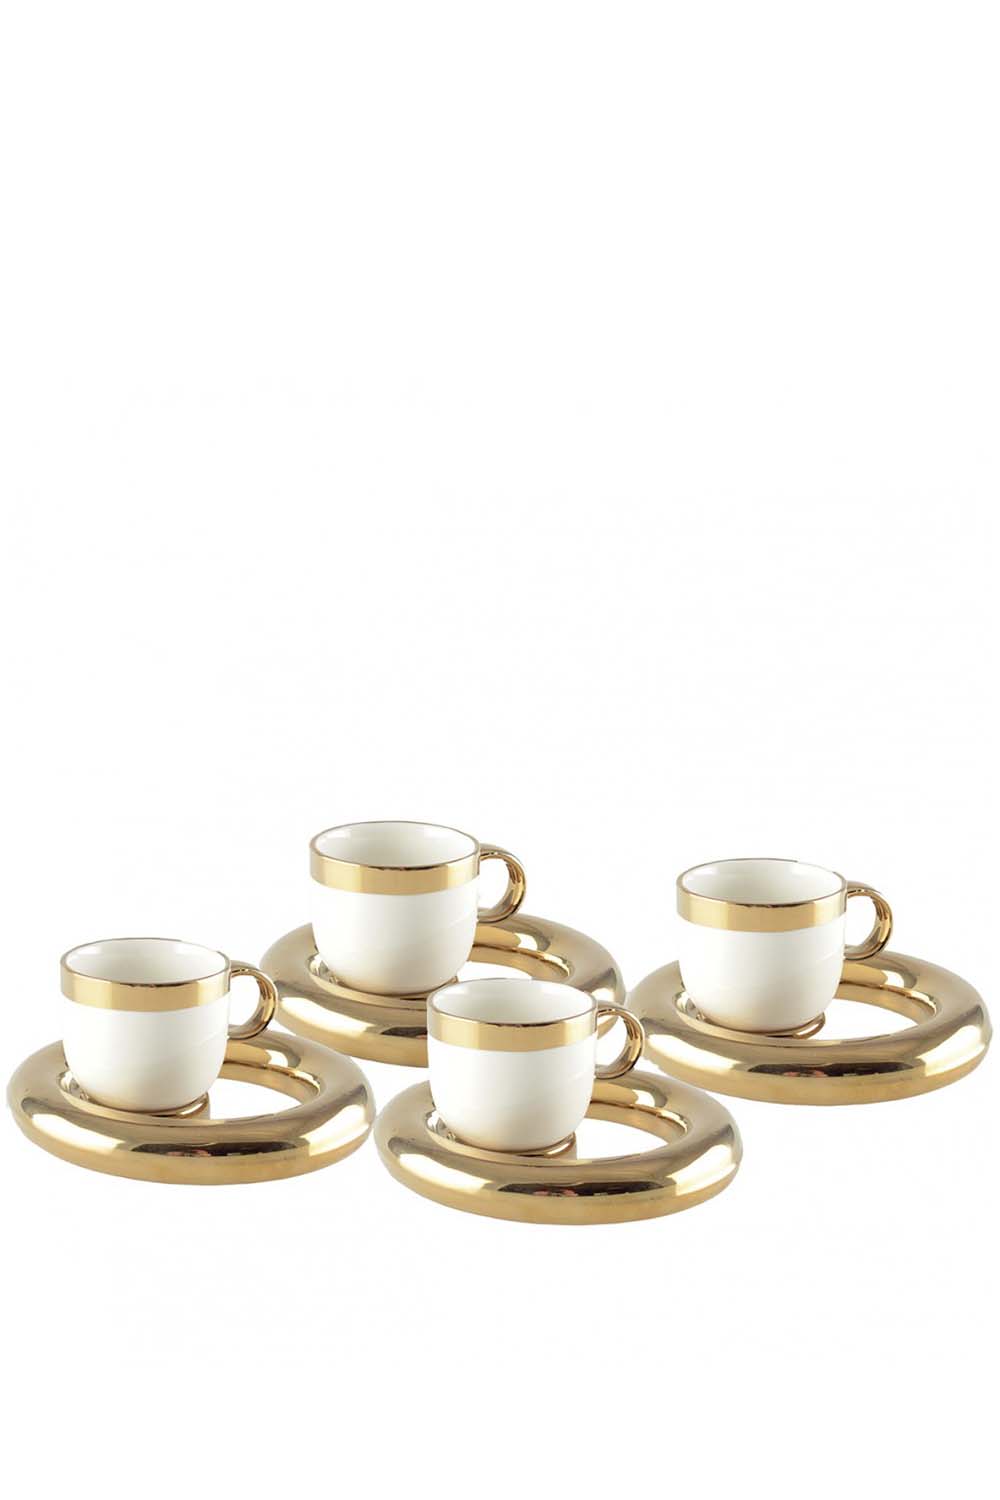 Circle Turkish Coffee/ Espresso Cups, Set of 4